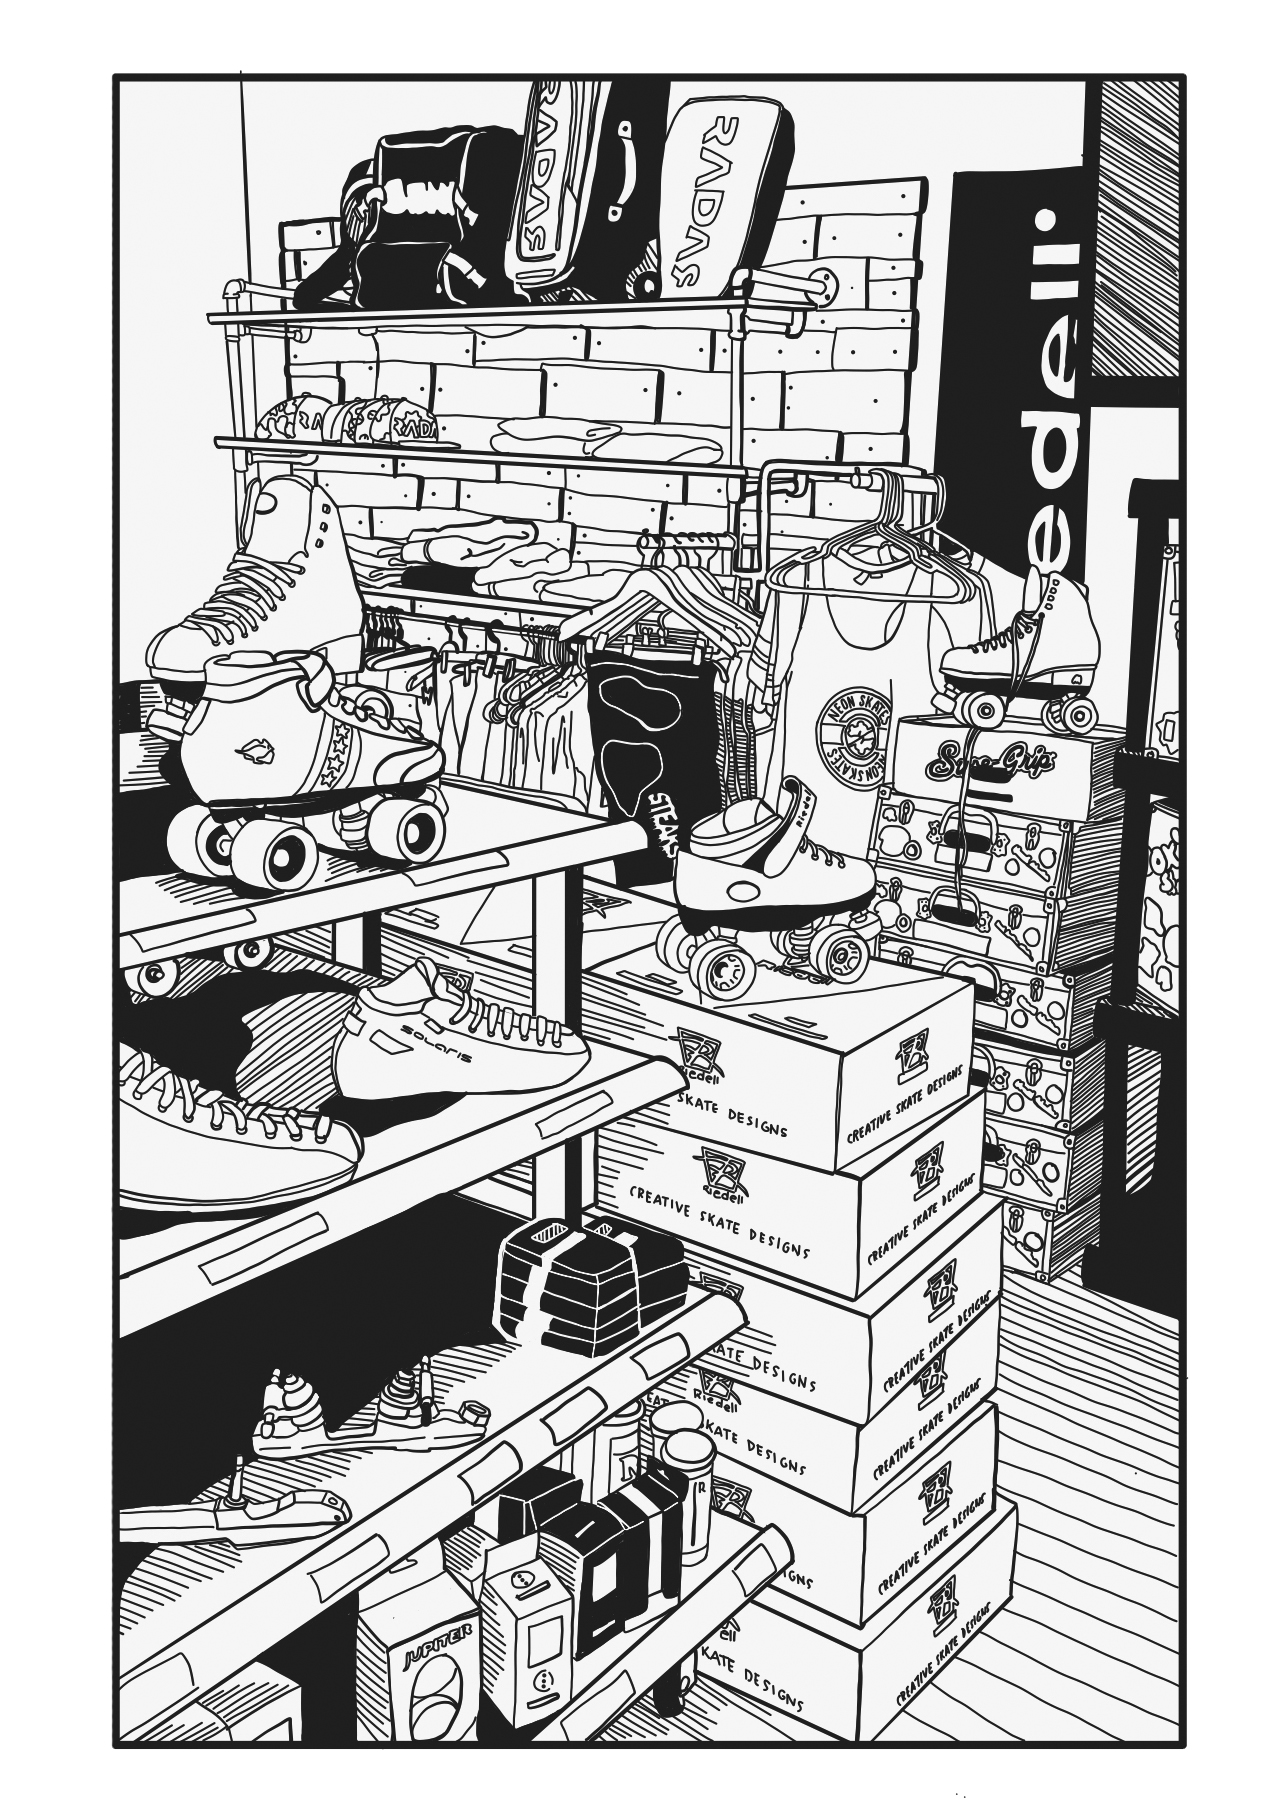 Illustration of the interior of a roller skate shop